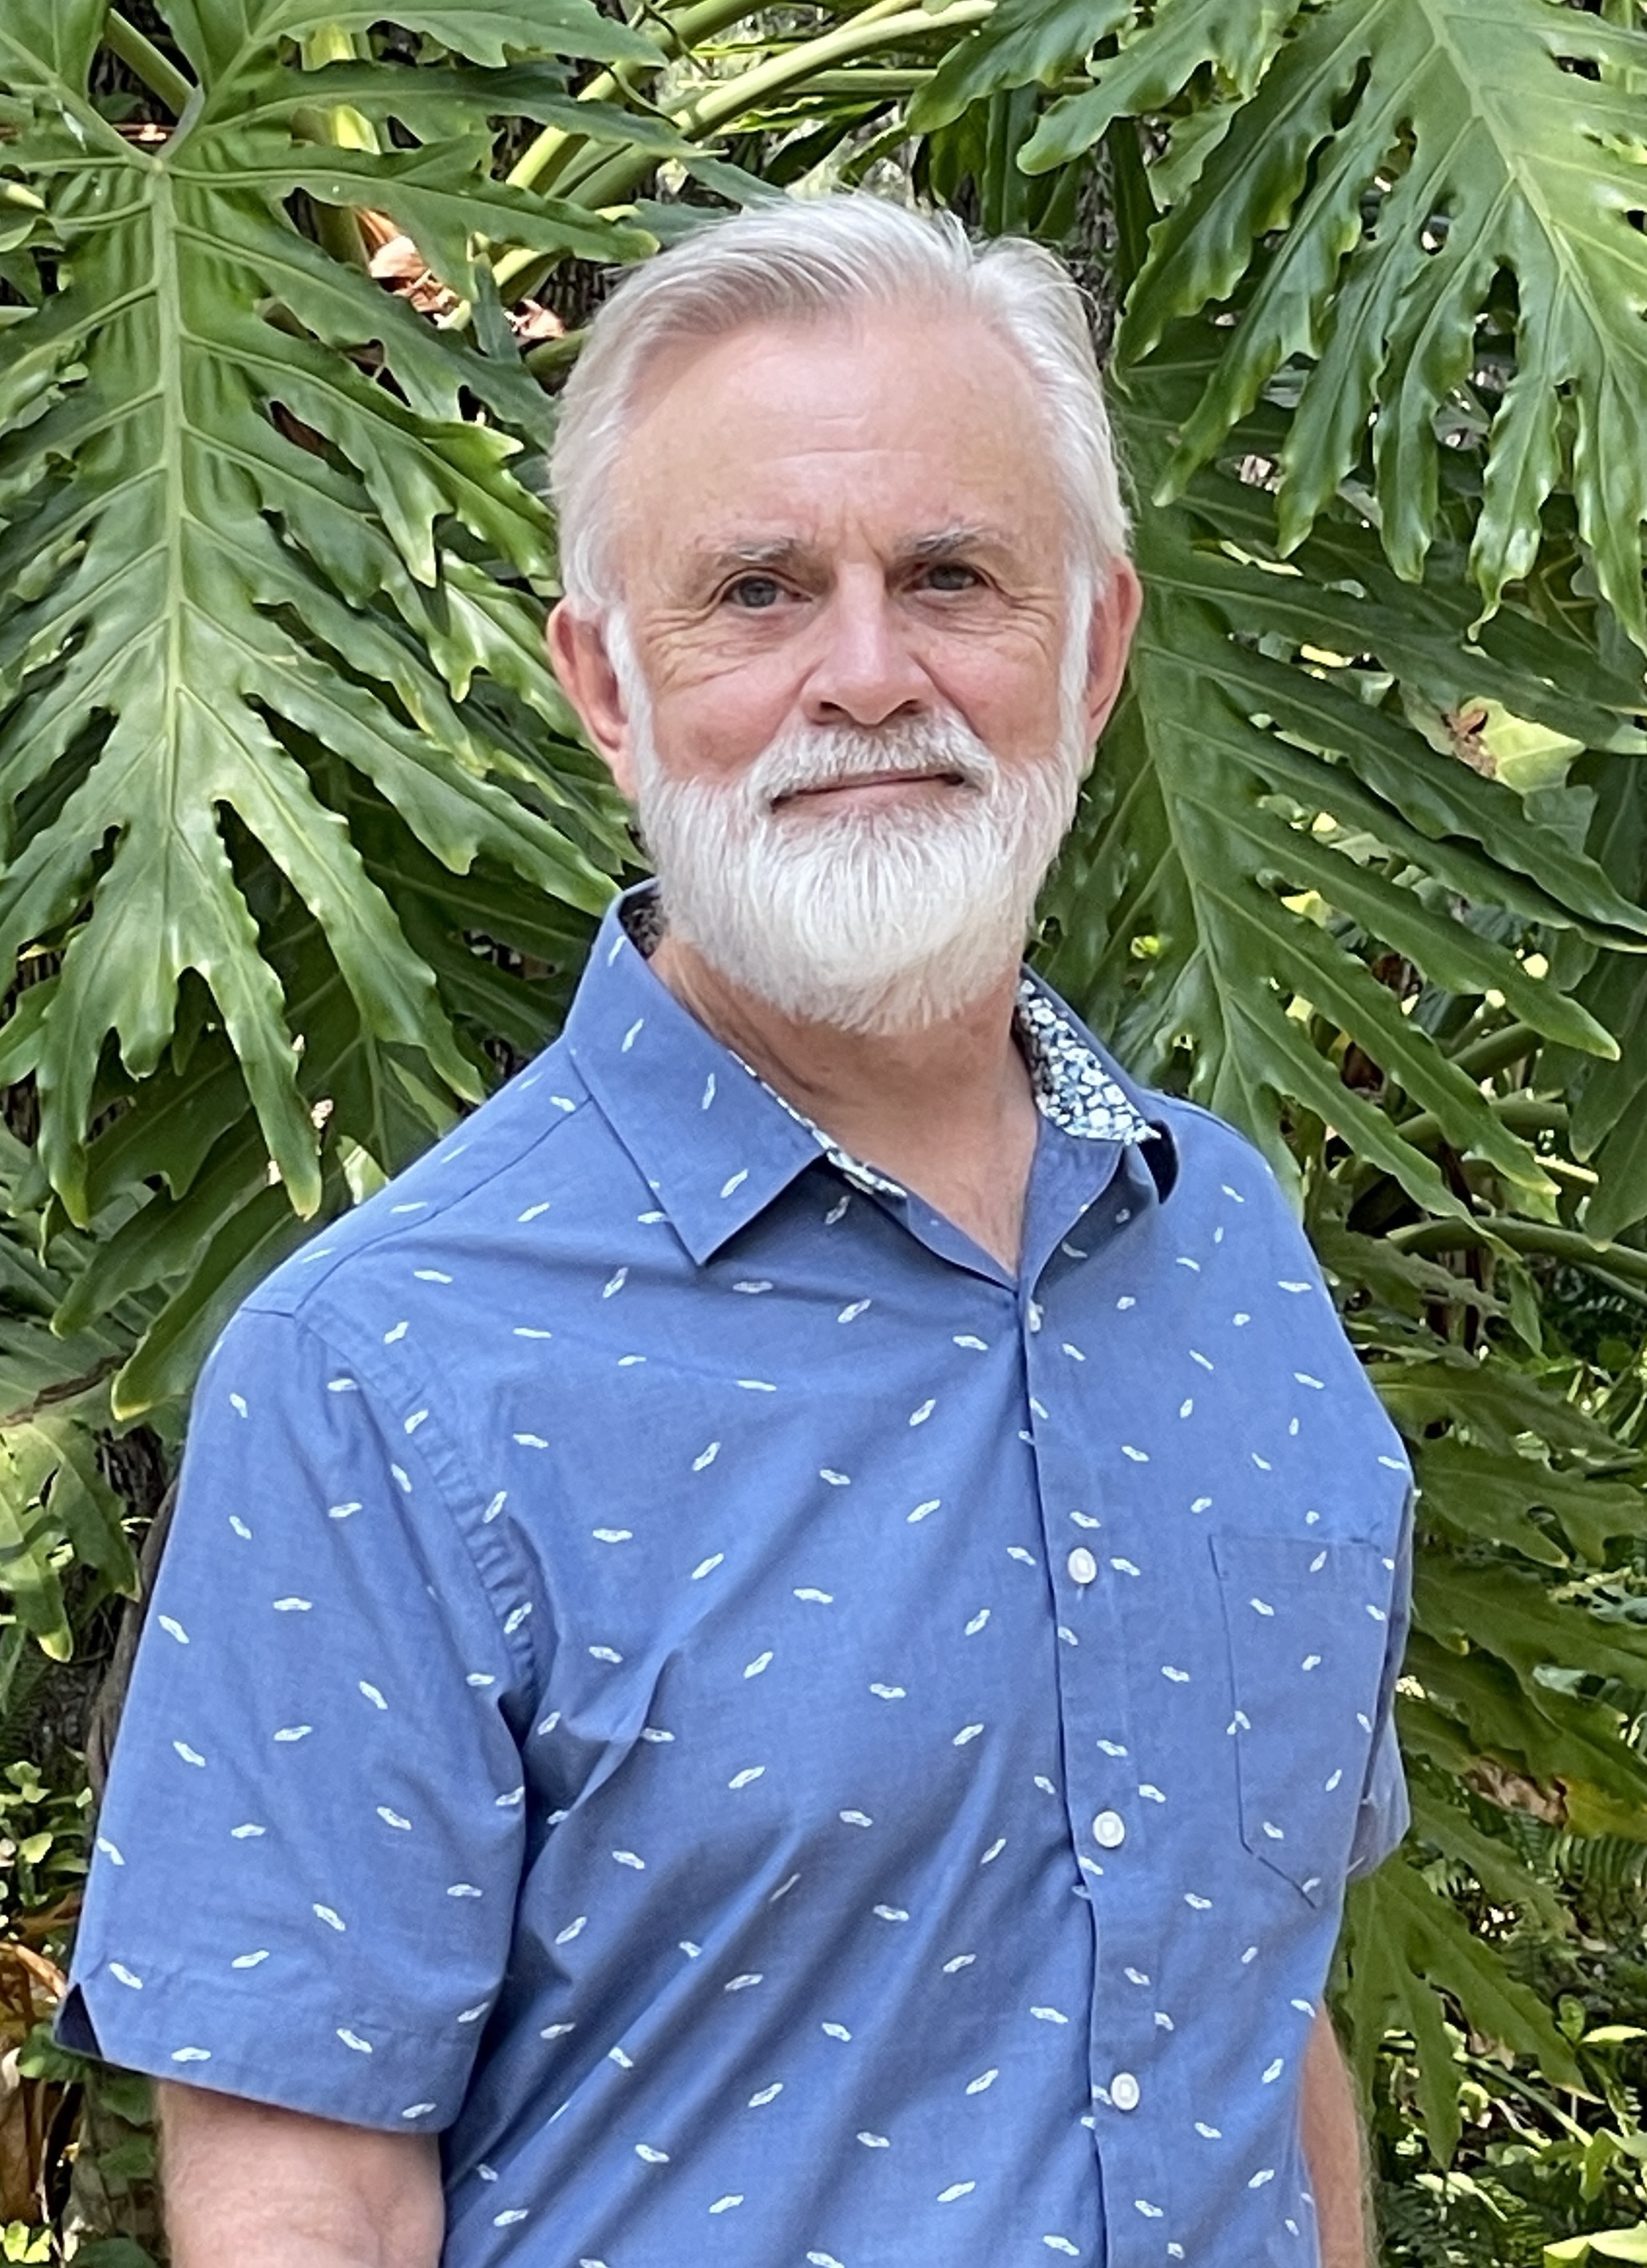 Author James R. Benn